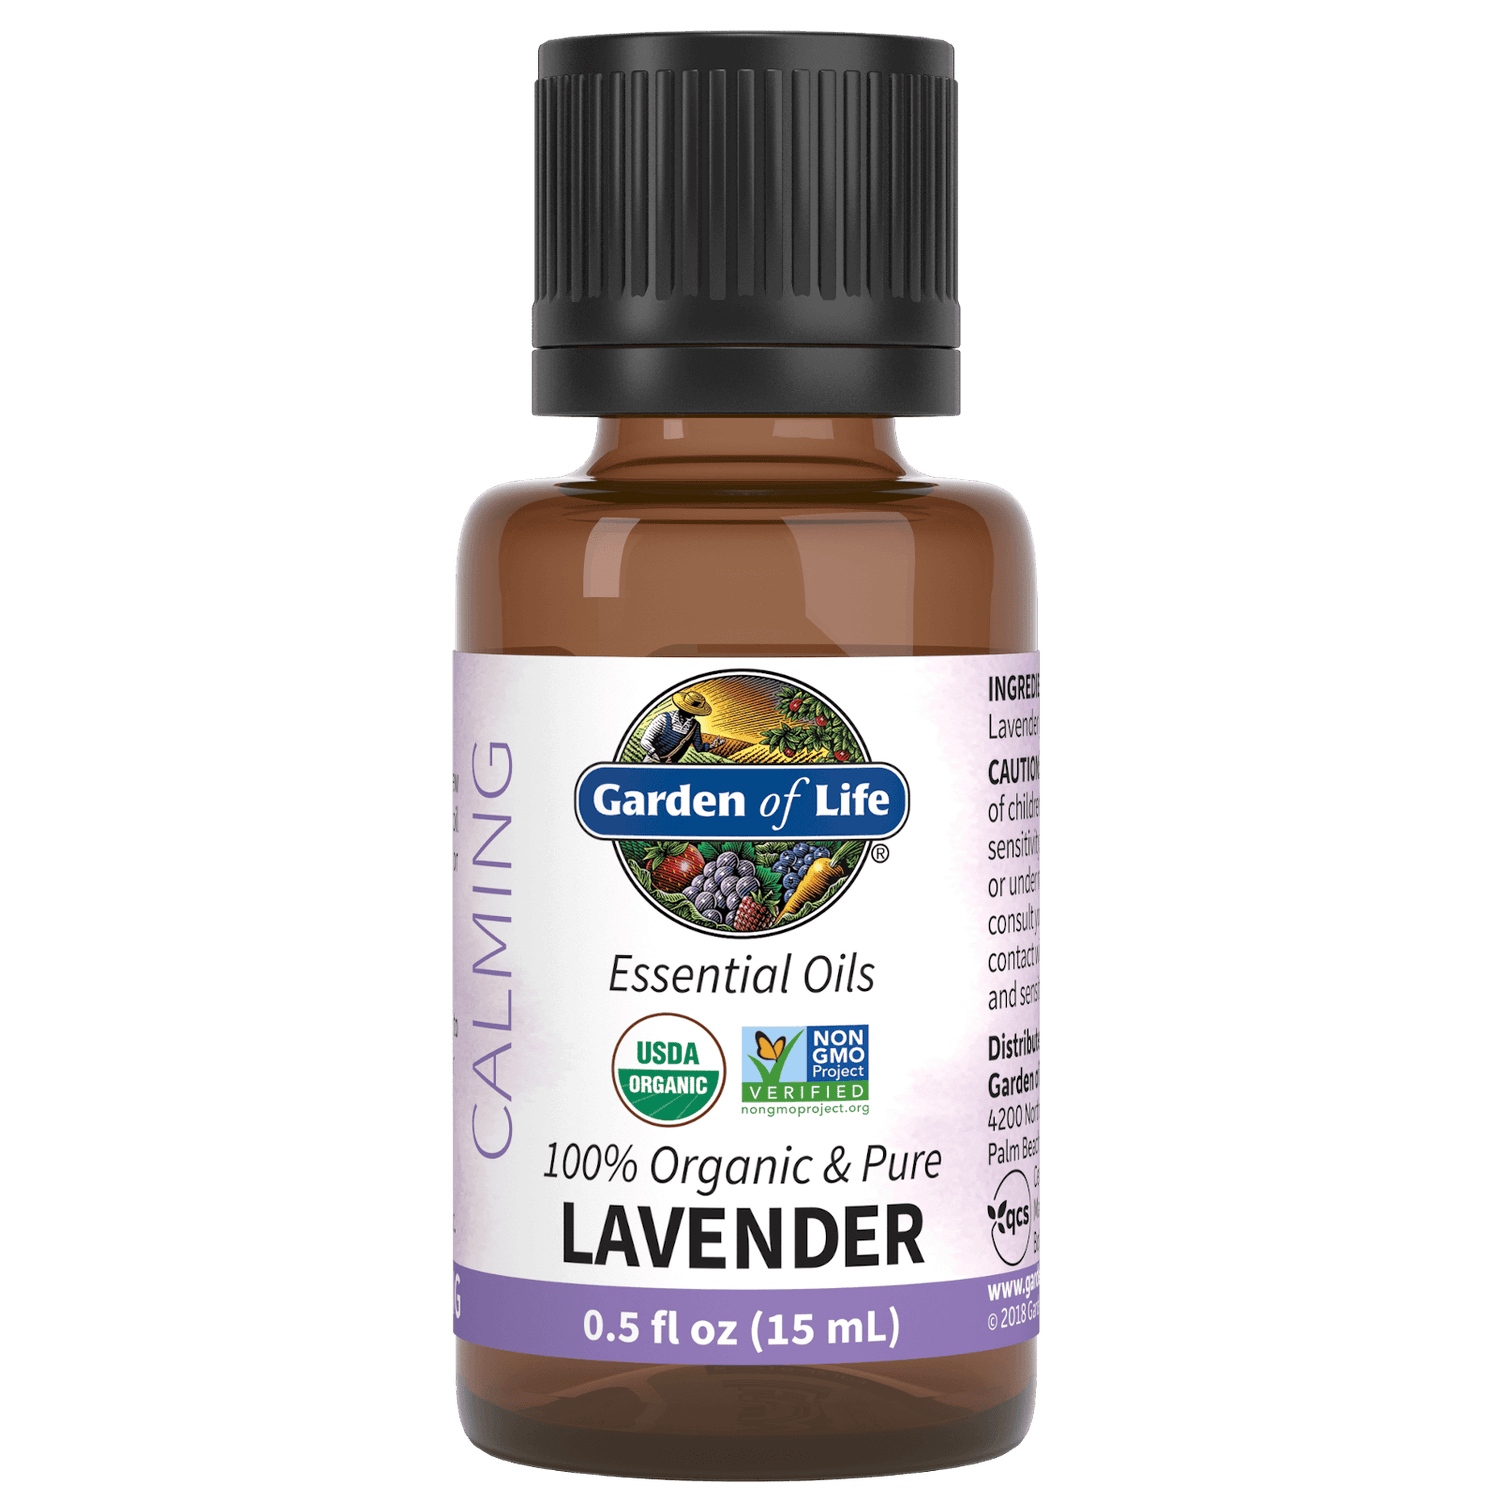 Organic Essential Oil - Lavender - 15ml